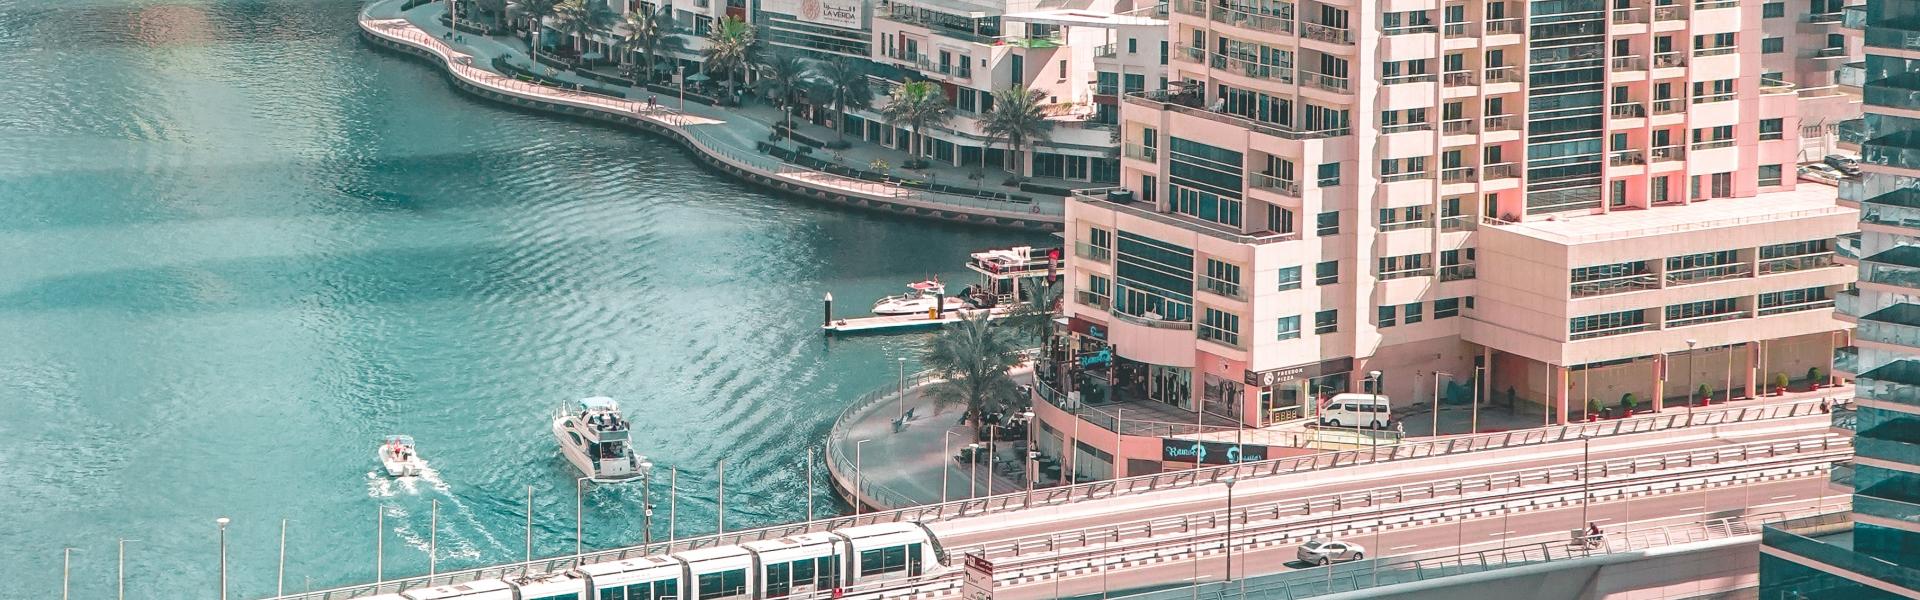 Dubai Marina Scenic View